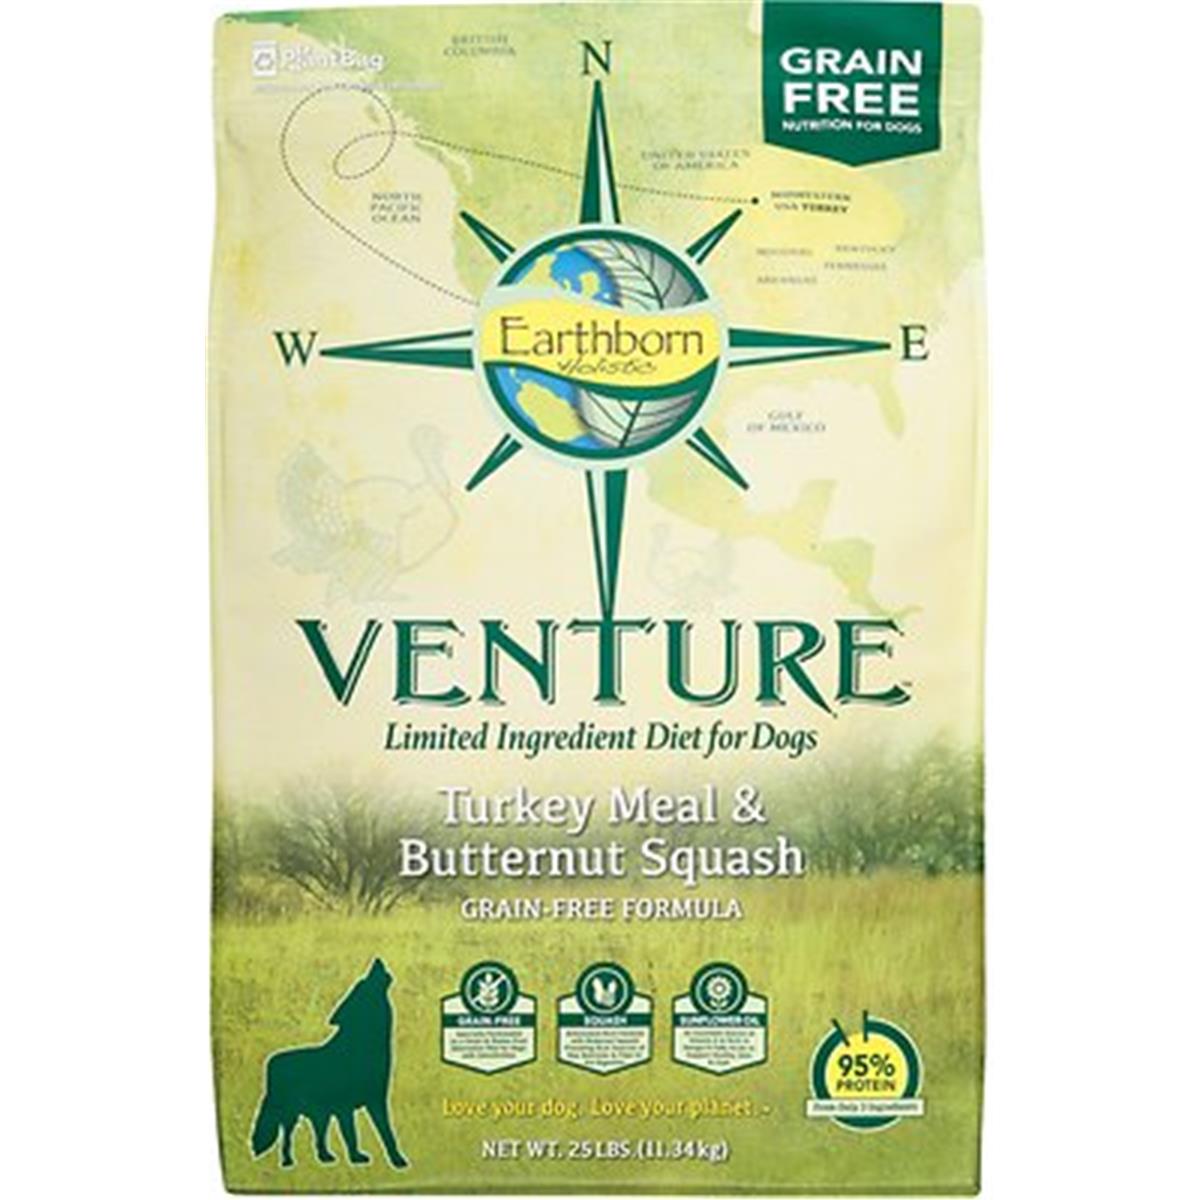 Pf57030 Venture Turkey Meal & Butternut Squash Grain-free Dry Dog Food - 25 Lbs